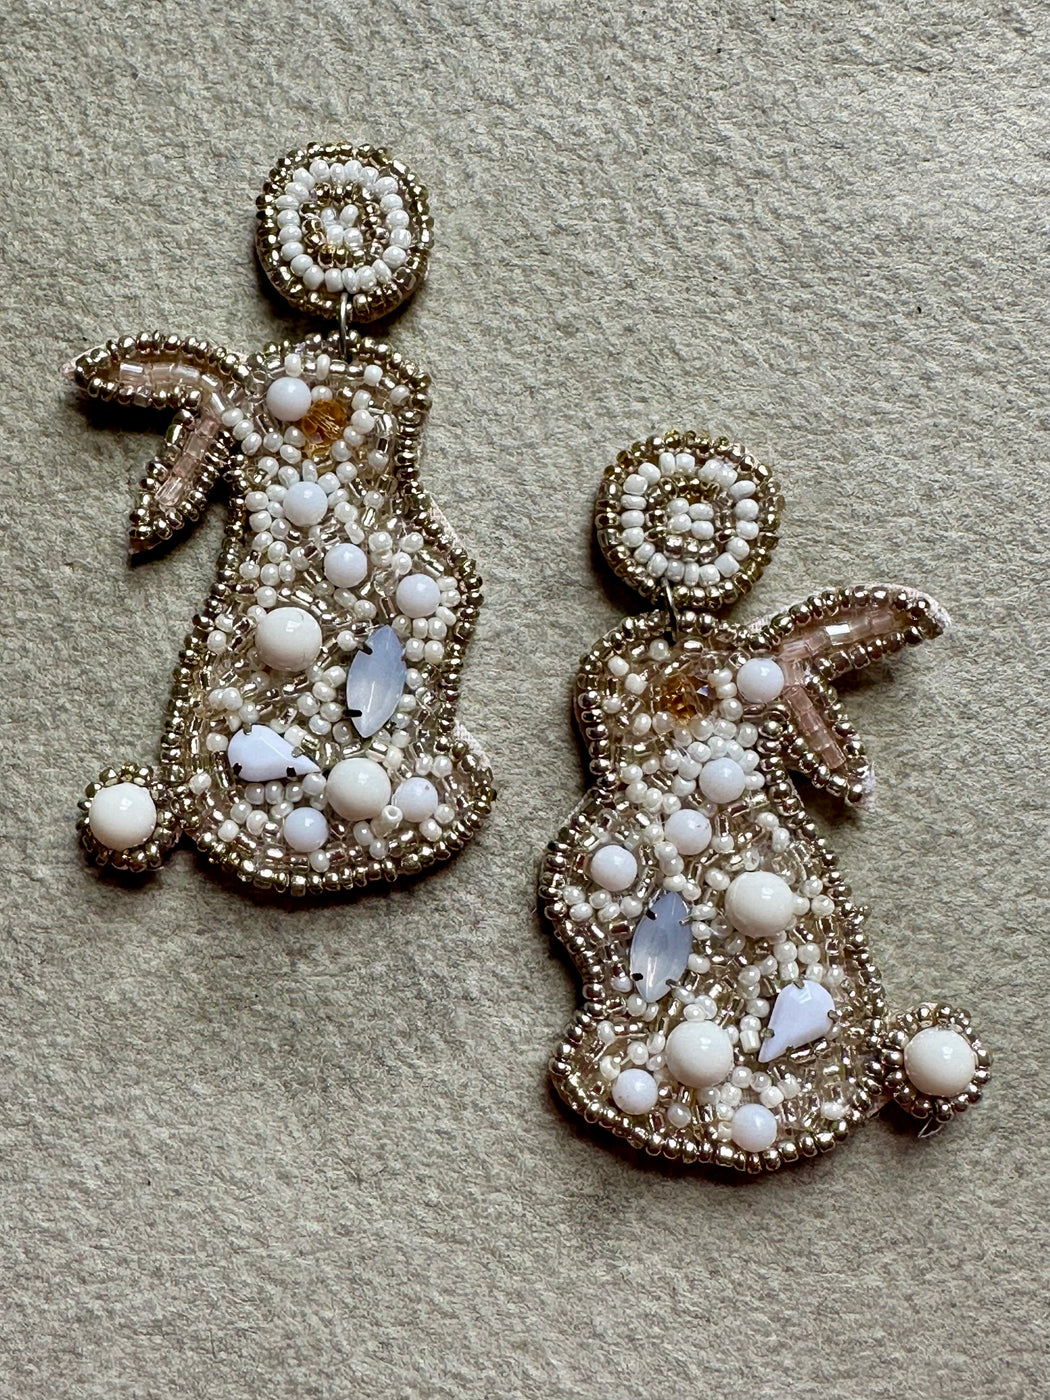 "Snow Bunny" Beaded Earrings